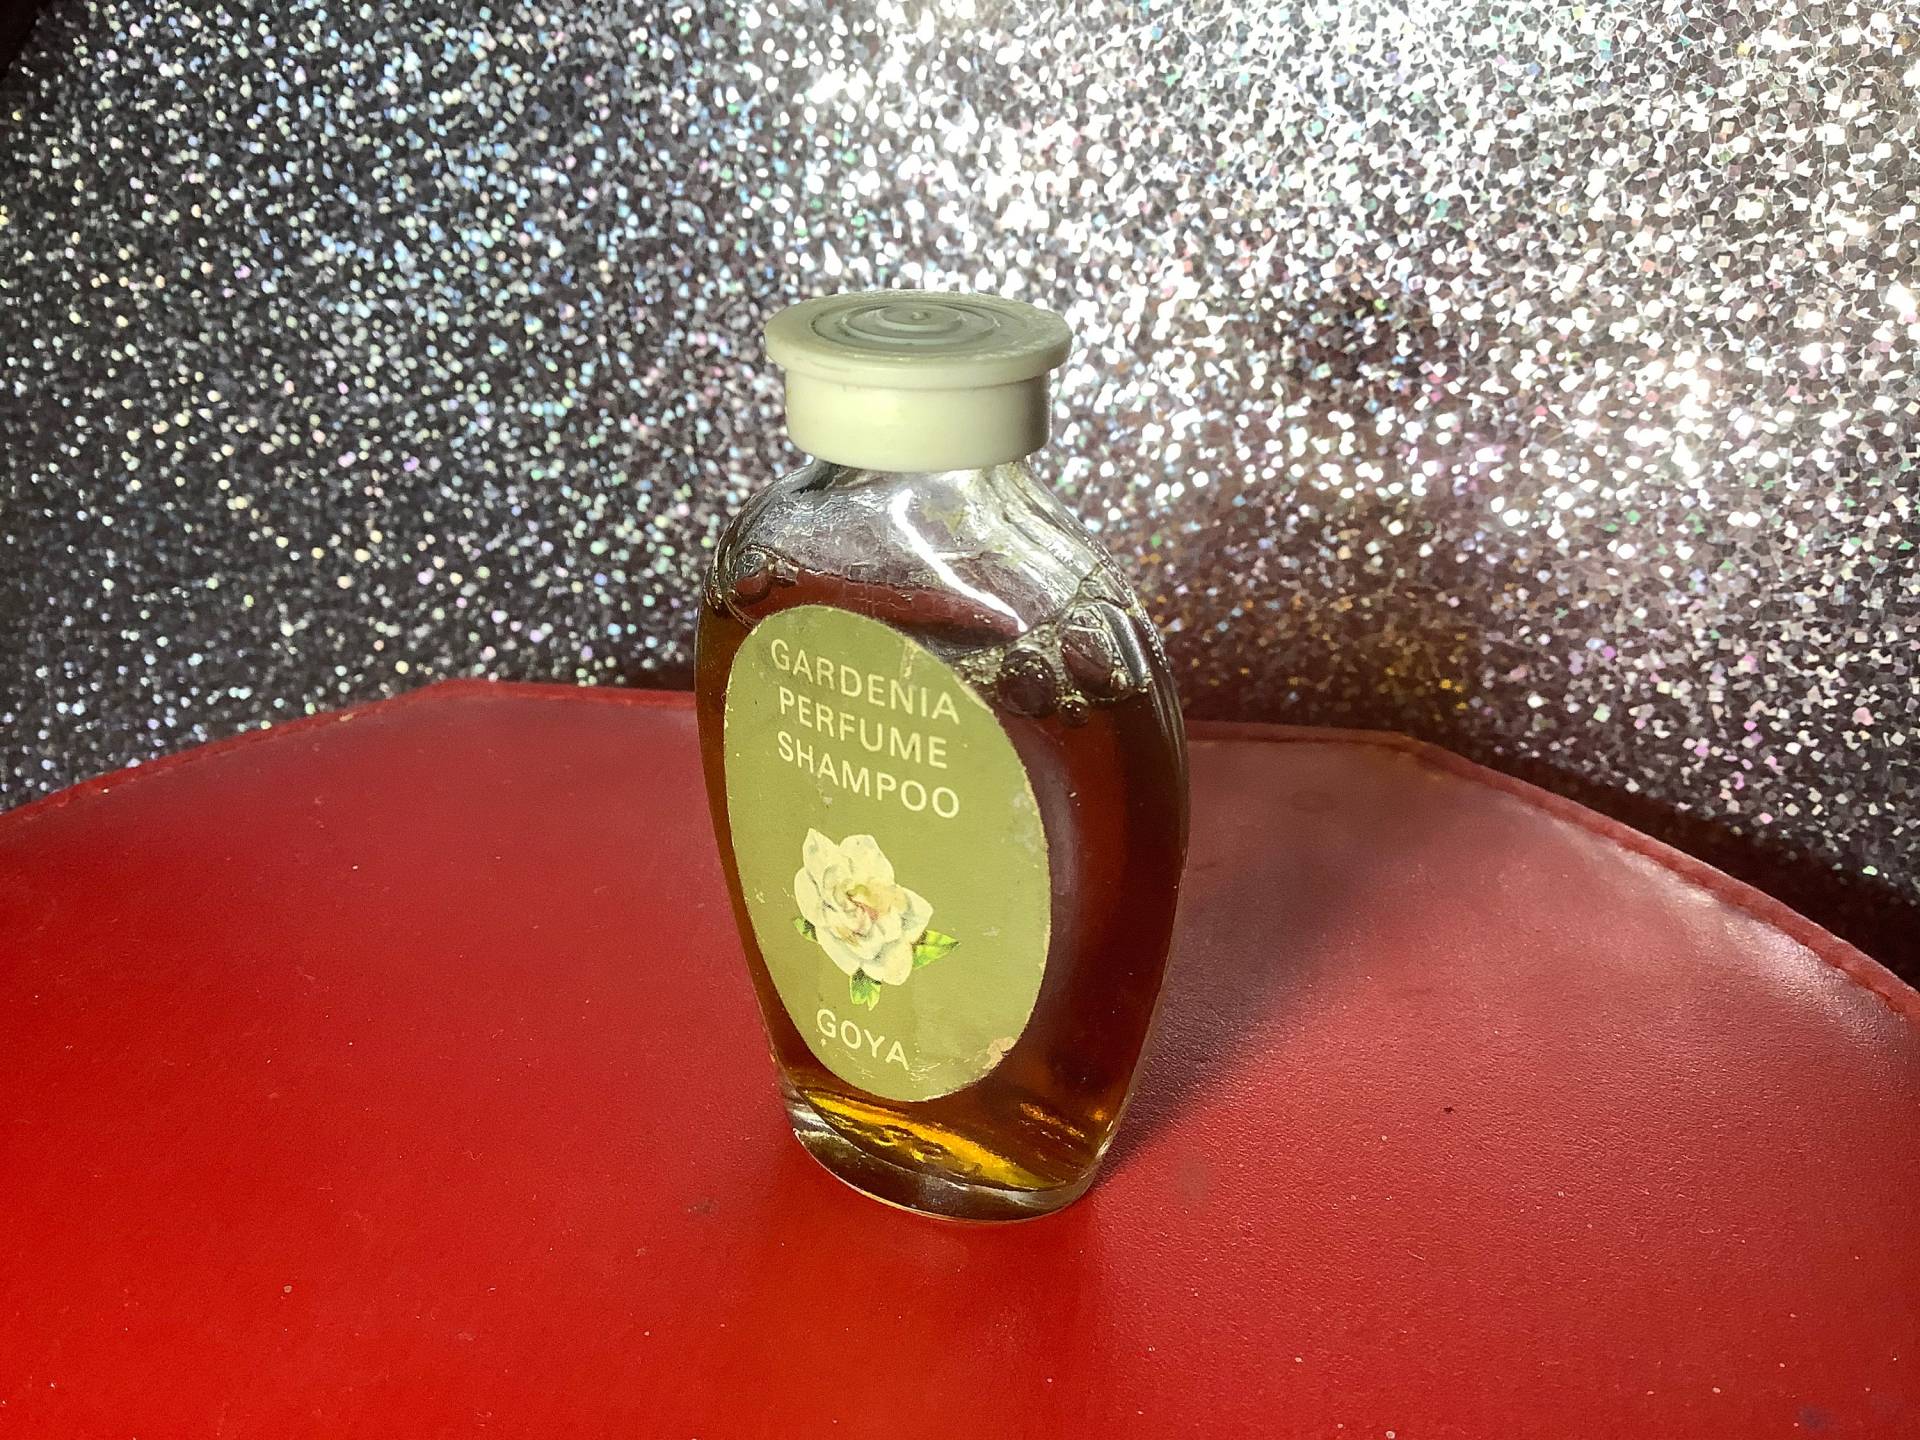 Goya Gardenia Parfum Shampoo von Etsy - LipstickandPanties